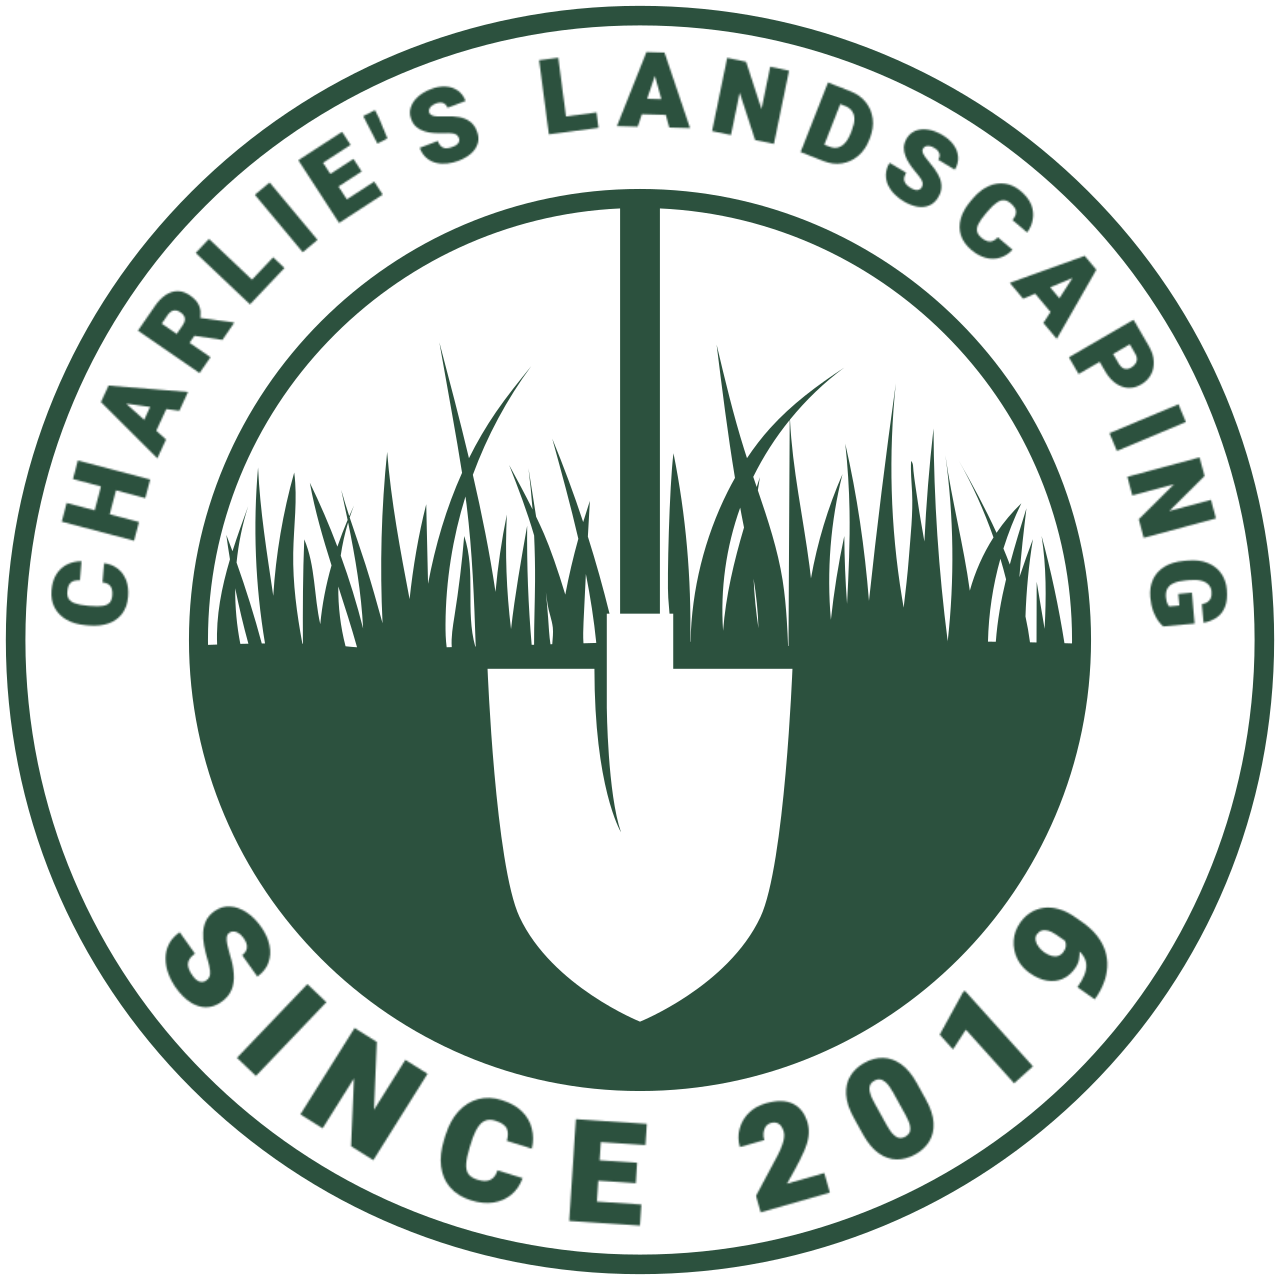 Charlieslandscaping19's logo